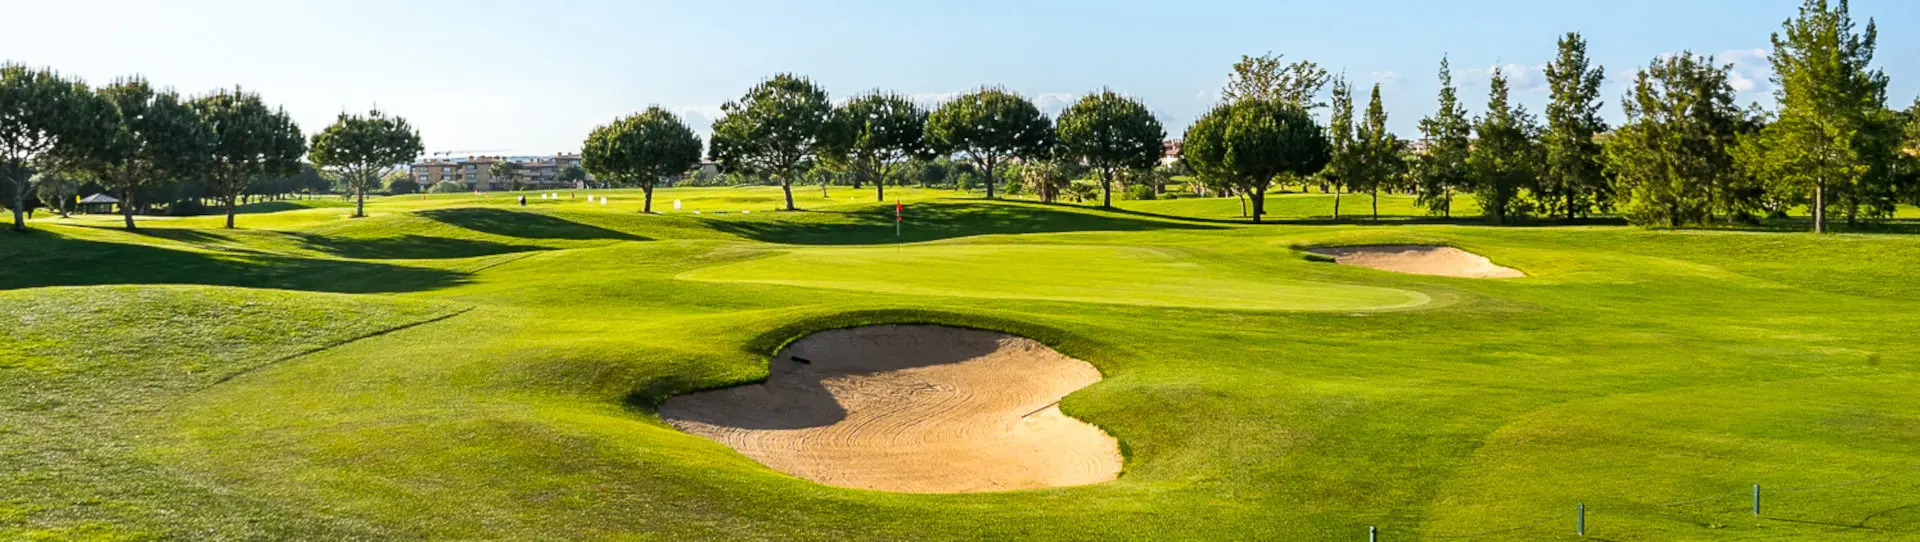 Portugal golf courses - Vilamoura Millennium golf course - Photo 1